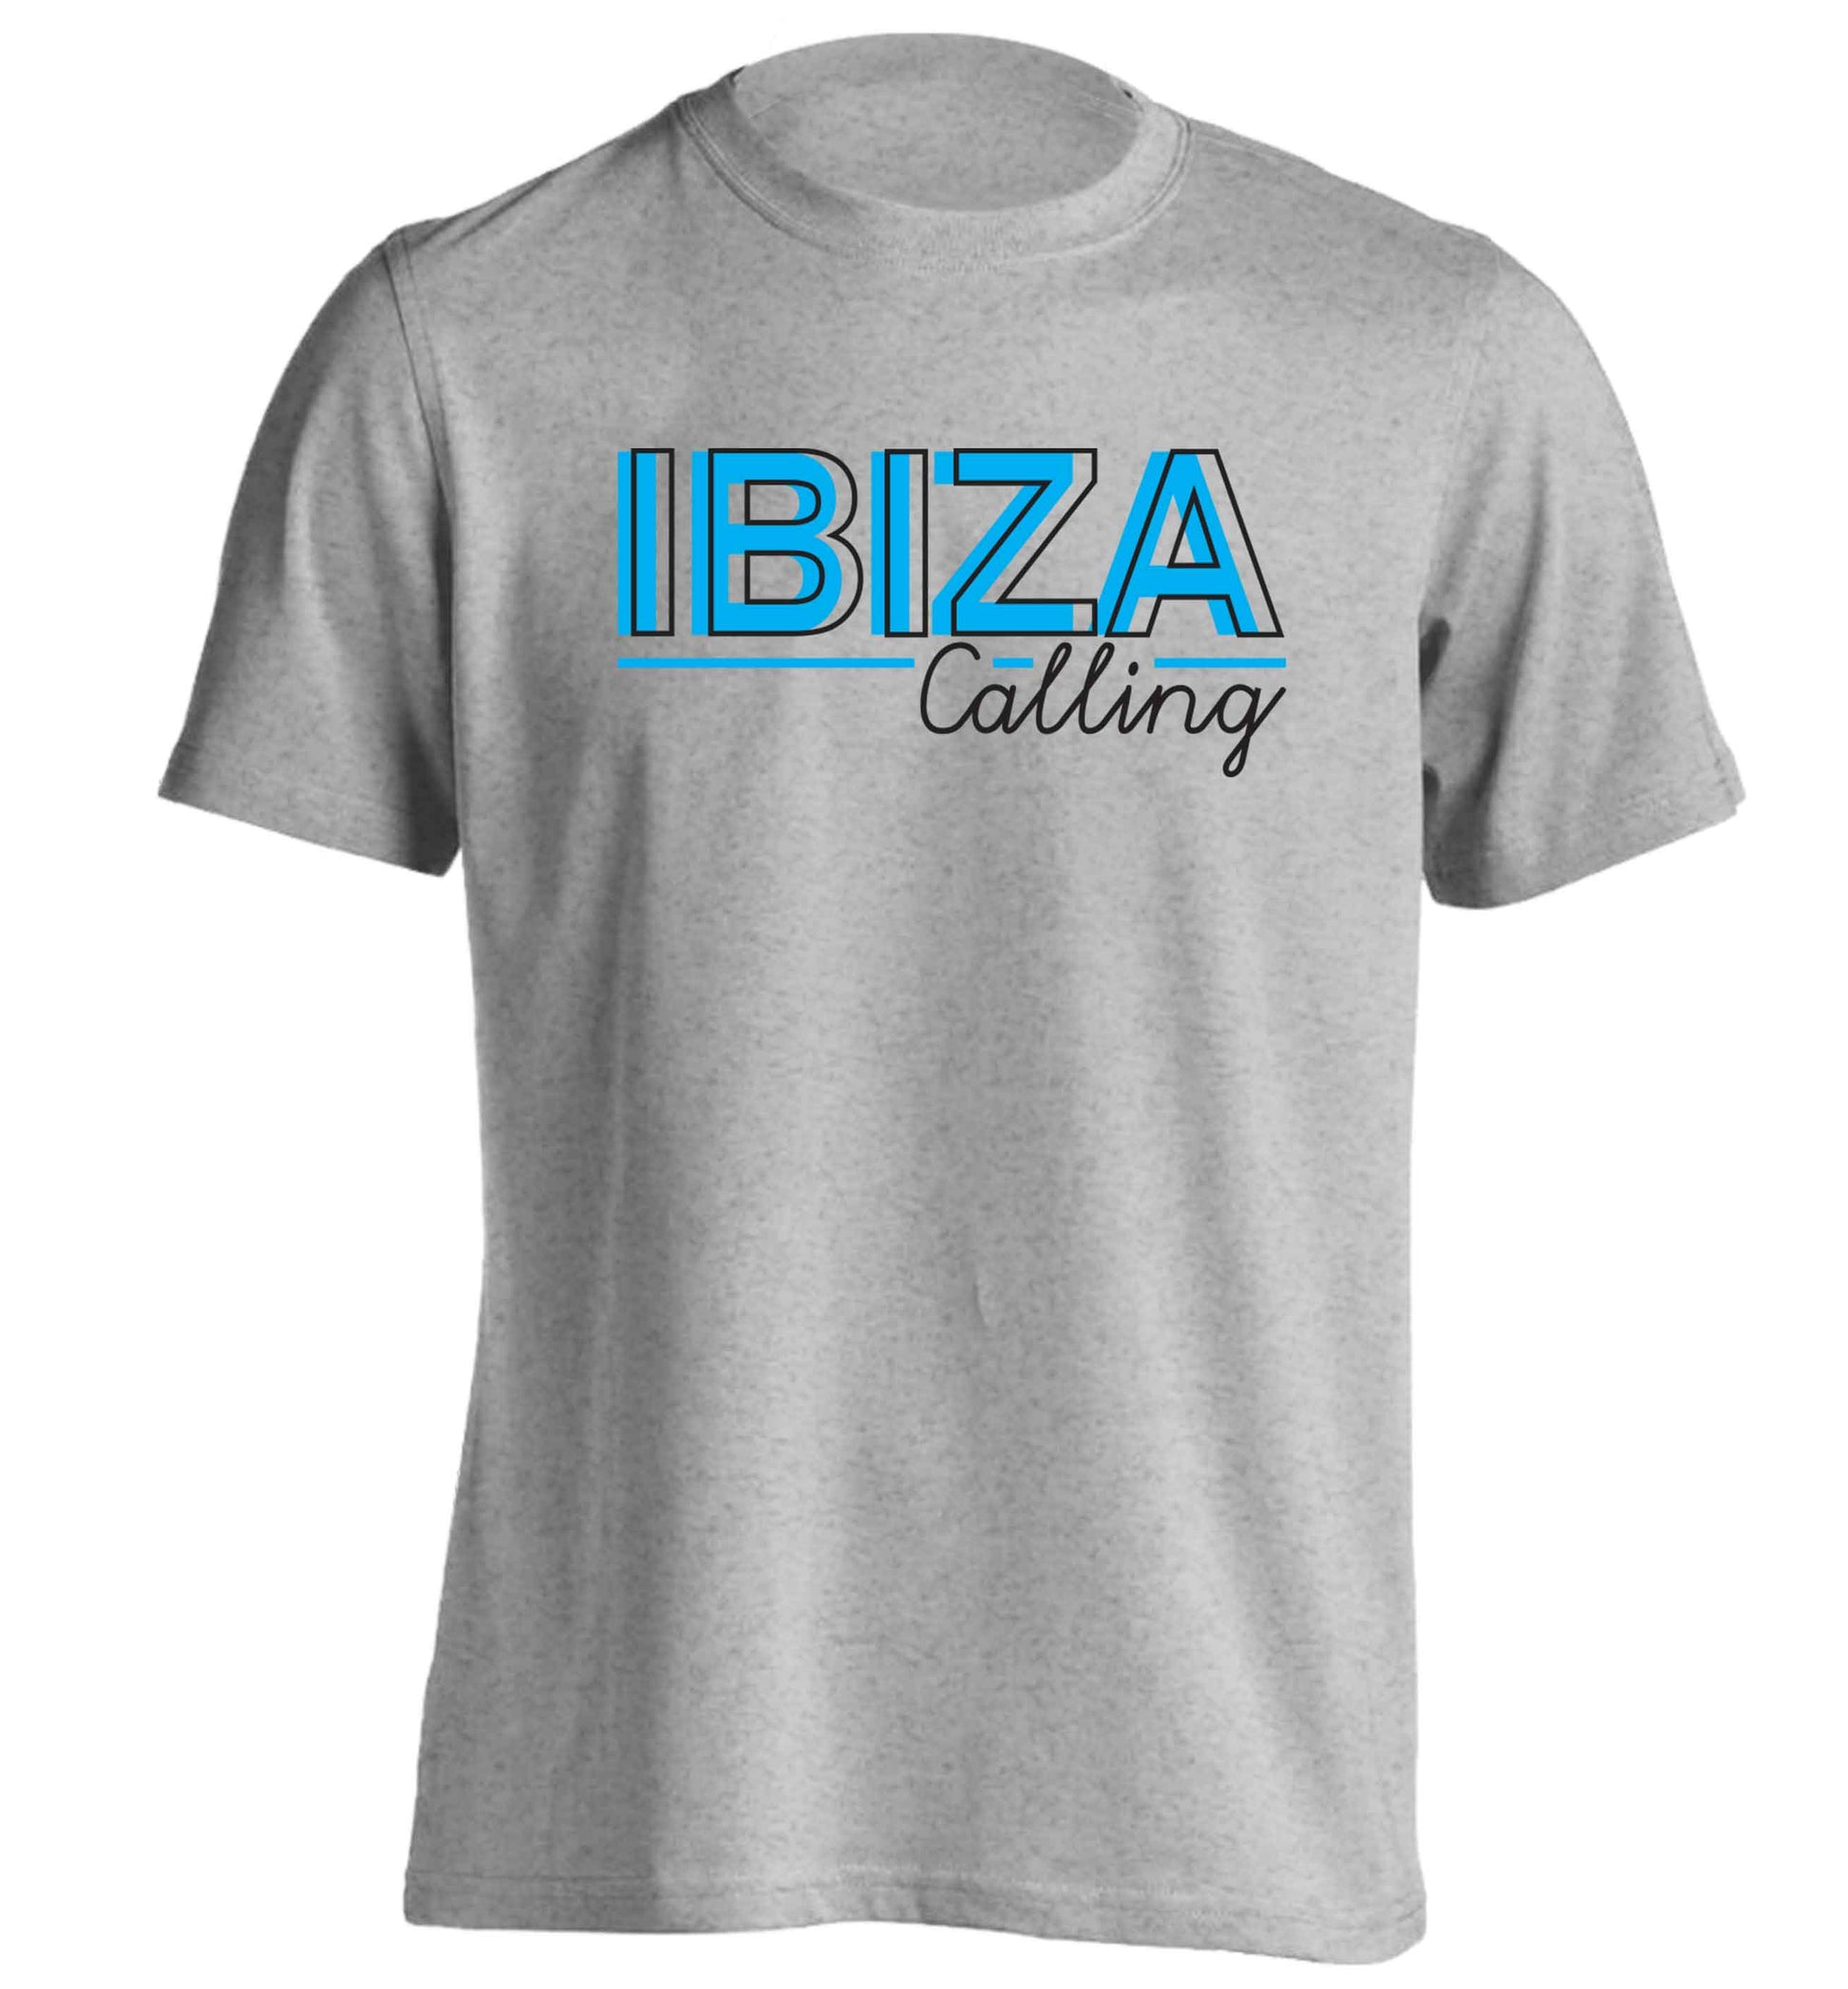 Ibiza calling adults unisex grey Tshirt 2XL